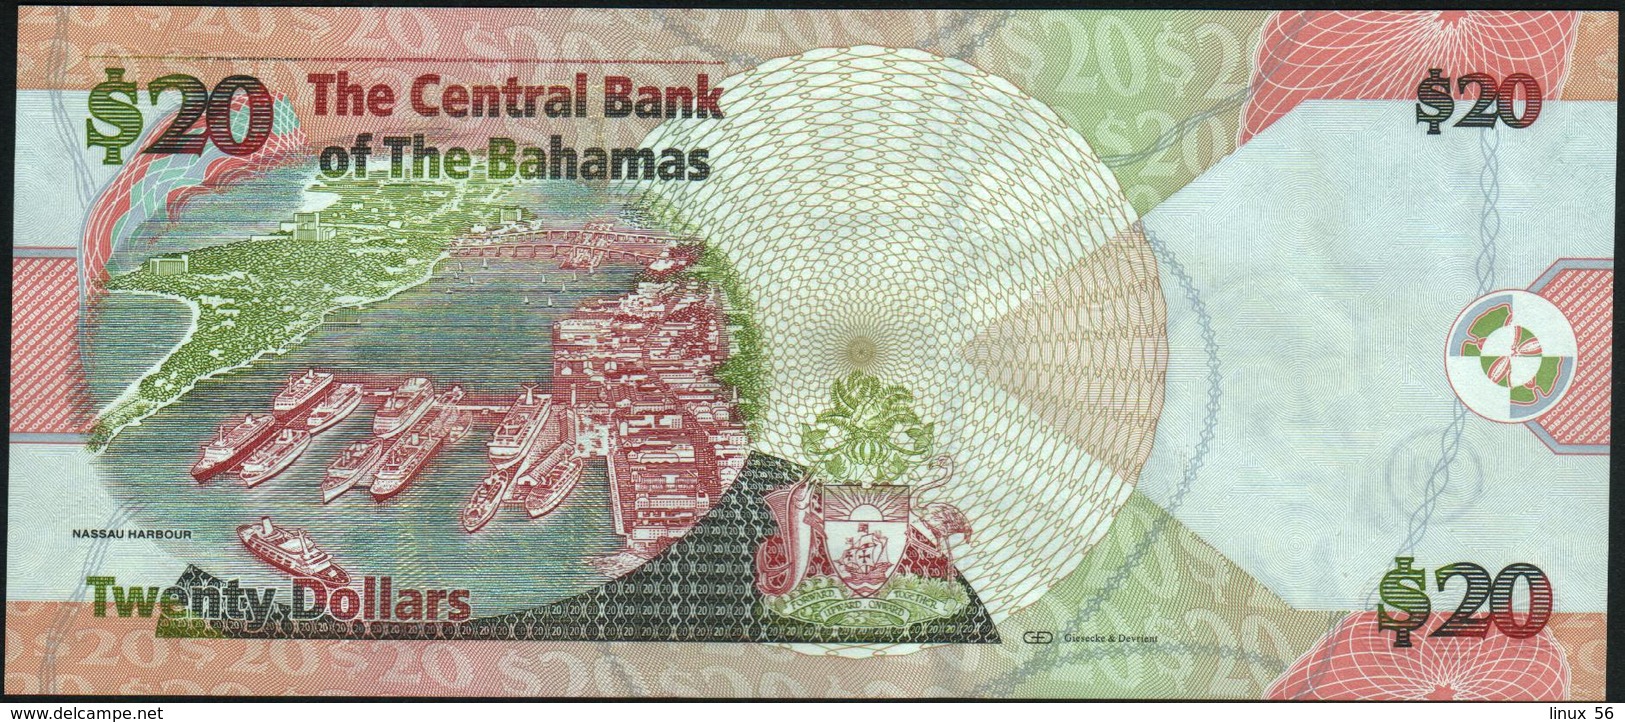 BAHAMAS - 20 Dollars 2010 {Printer: Giesecke & Devrient ~ Germany} UNC P.74 A - Bahamas